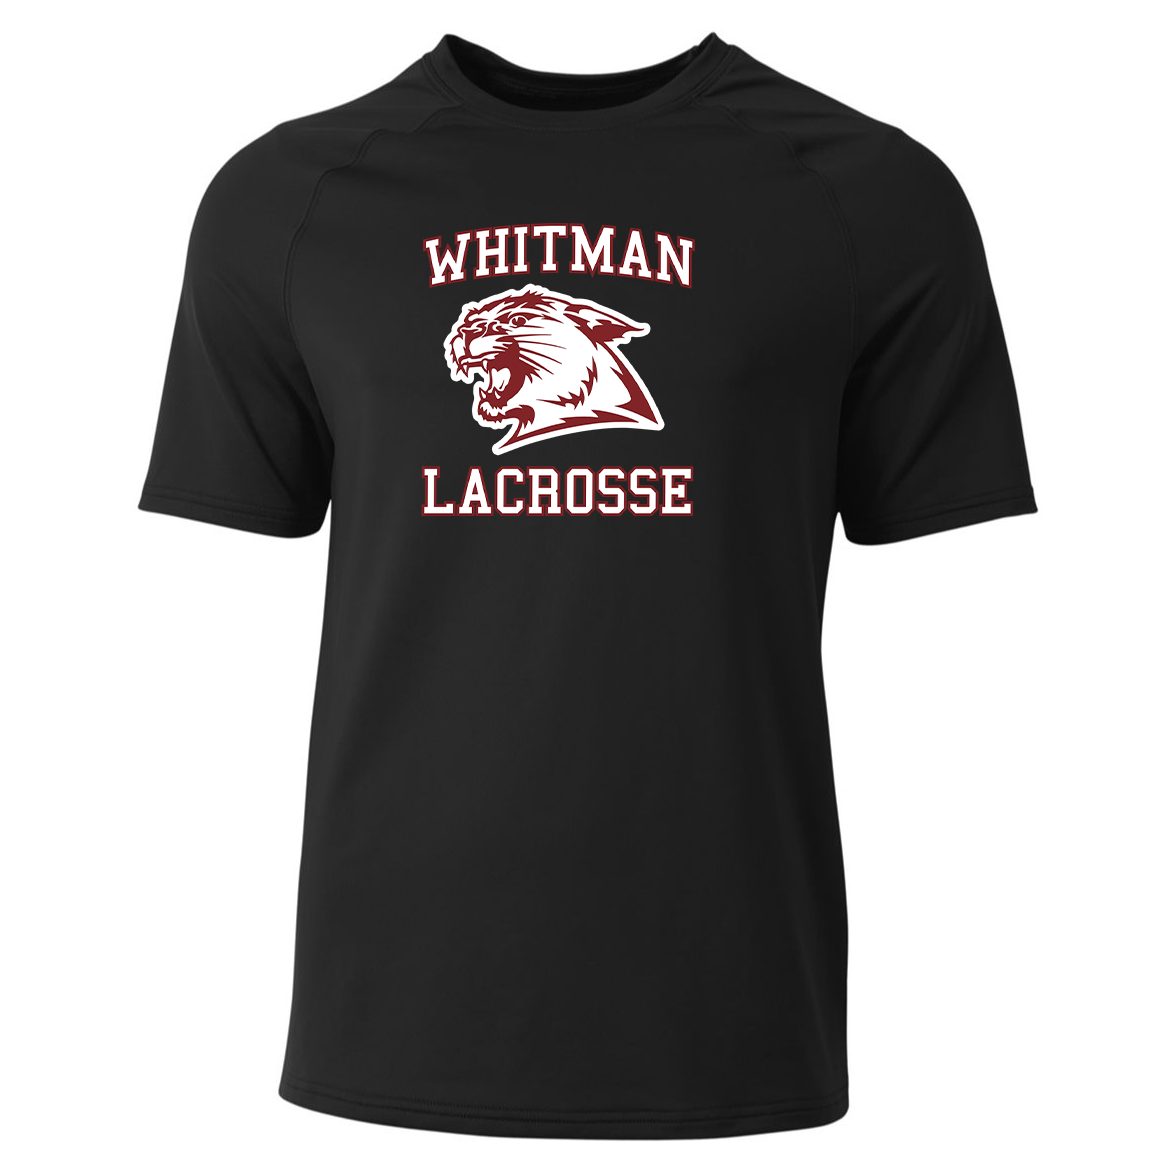 Whitman Lacrosse A4 Bionic Tee